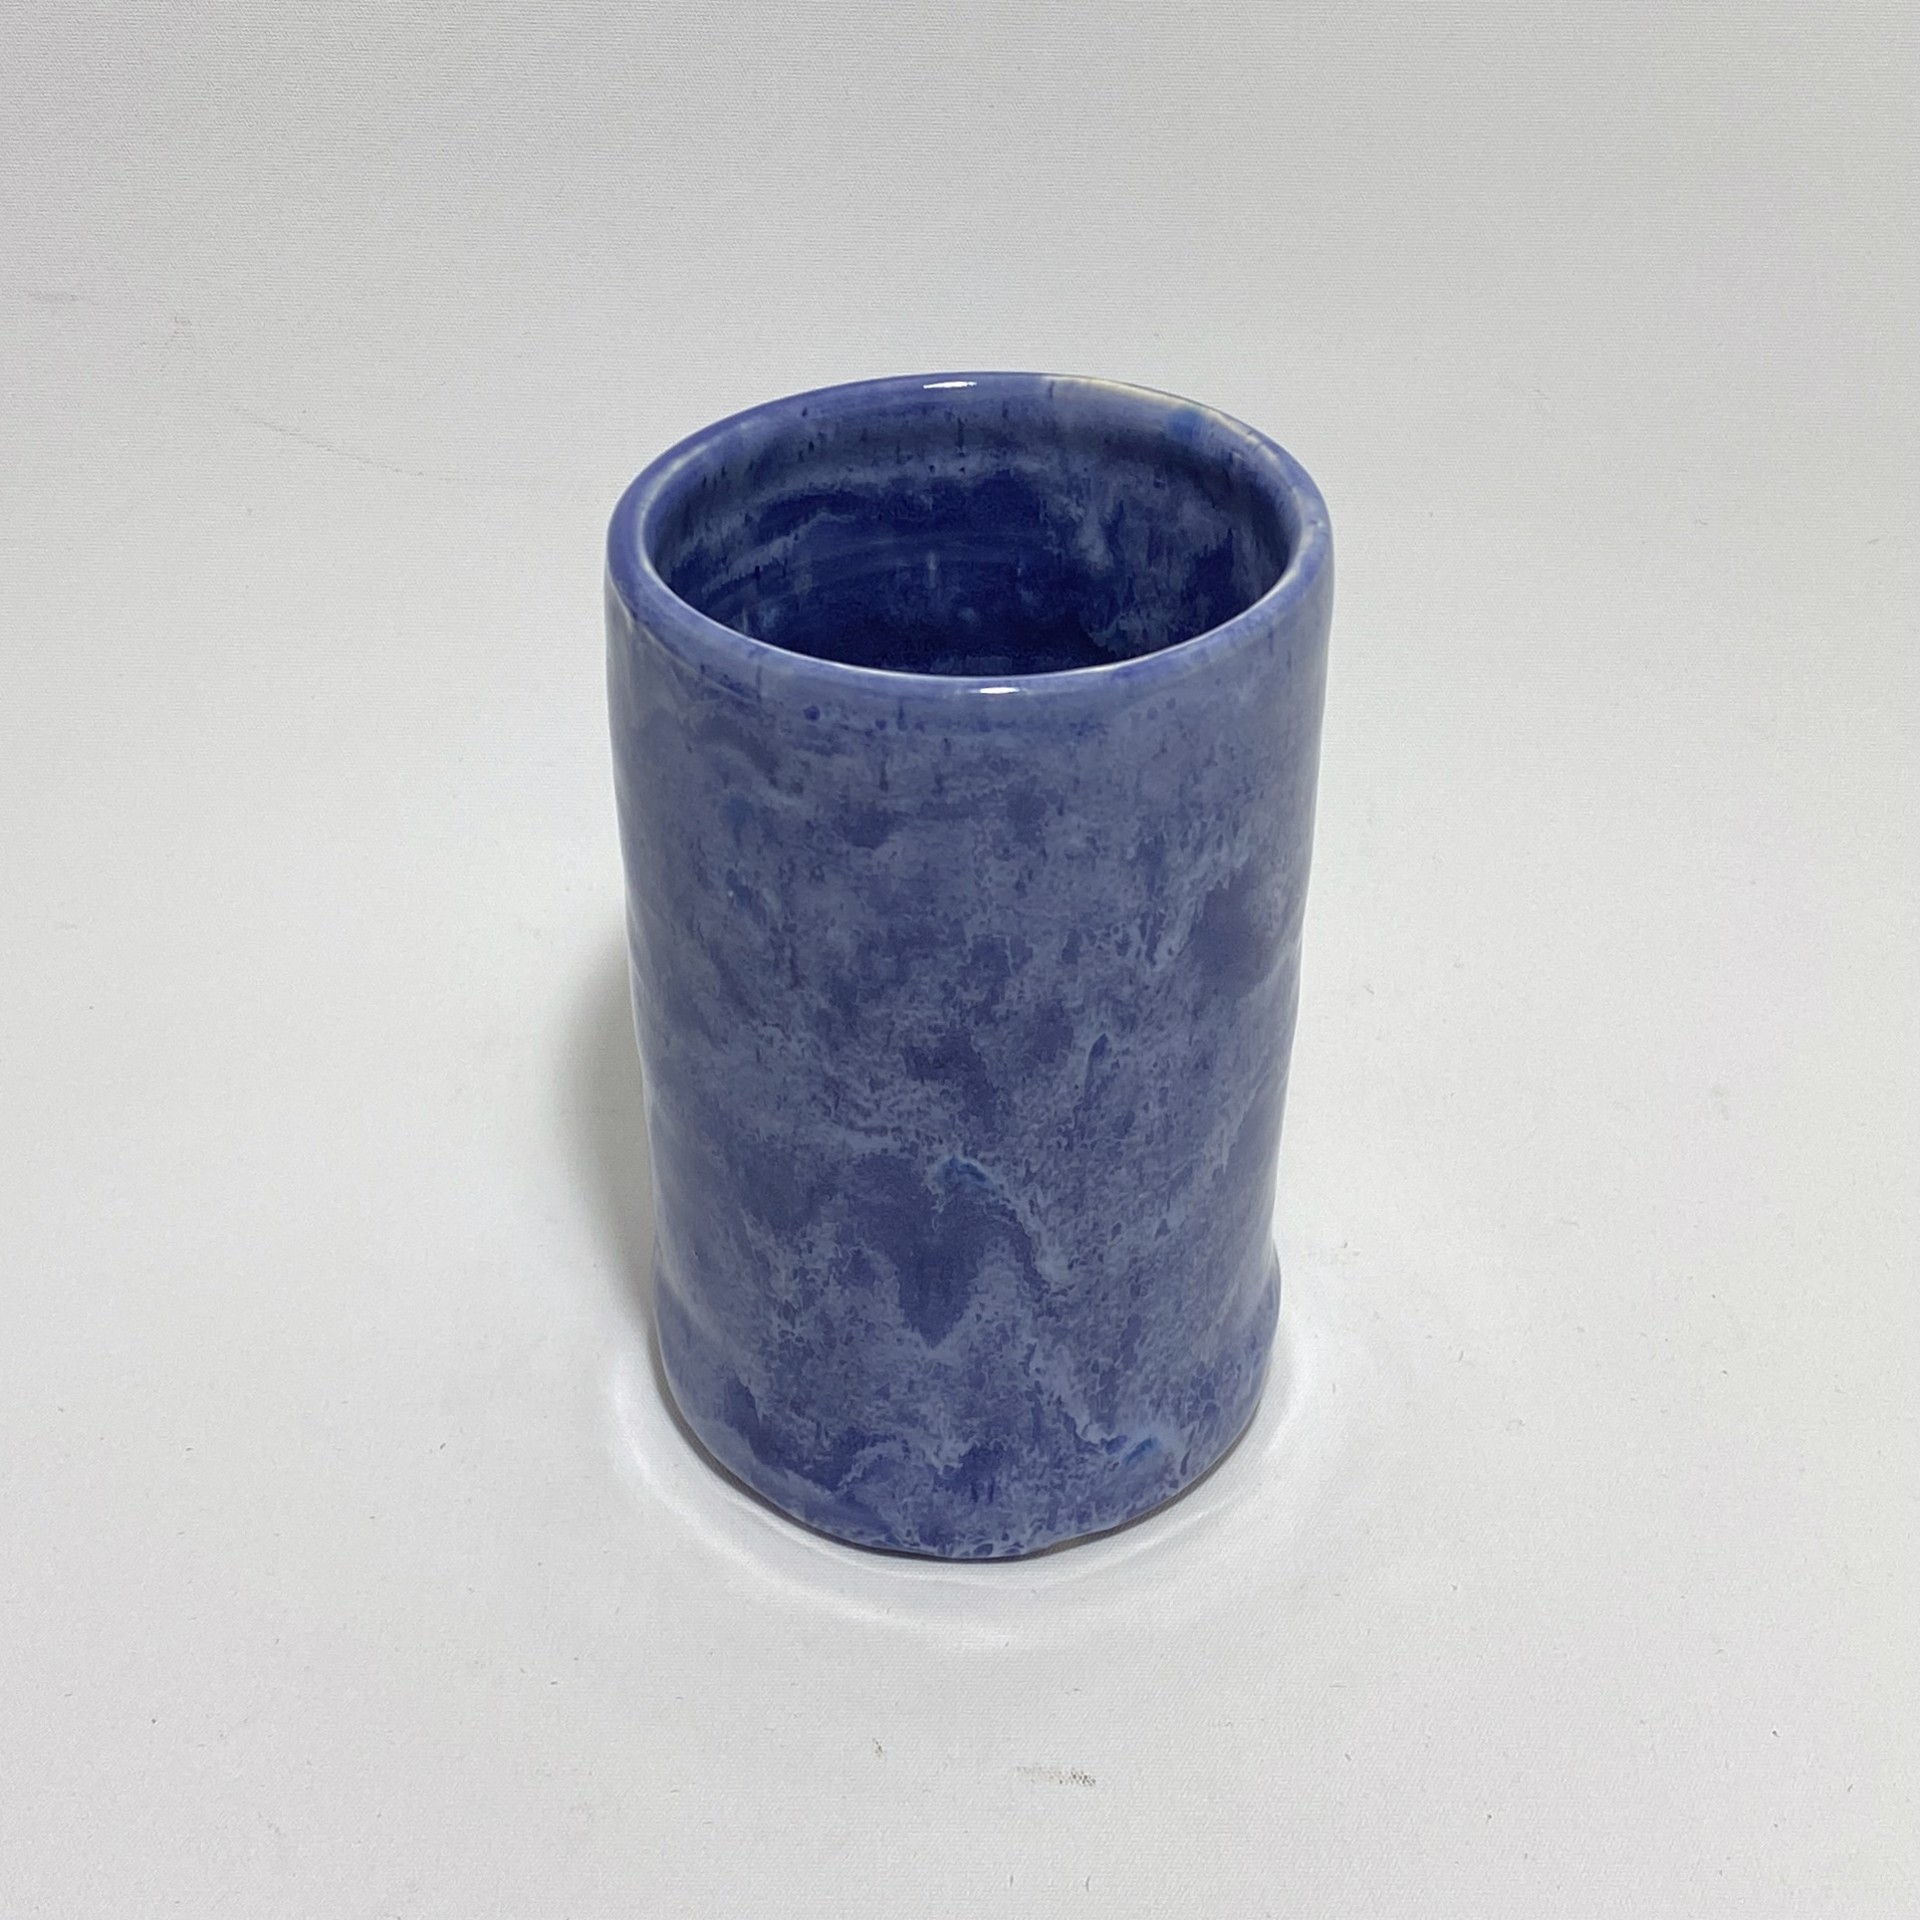 "Blue Vase" by Elizabeth W. by One Step Beyond